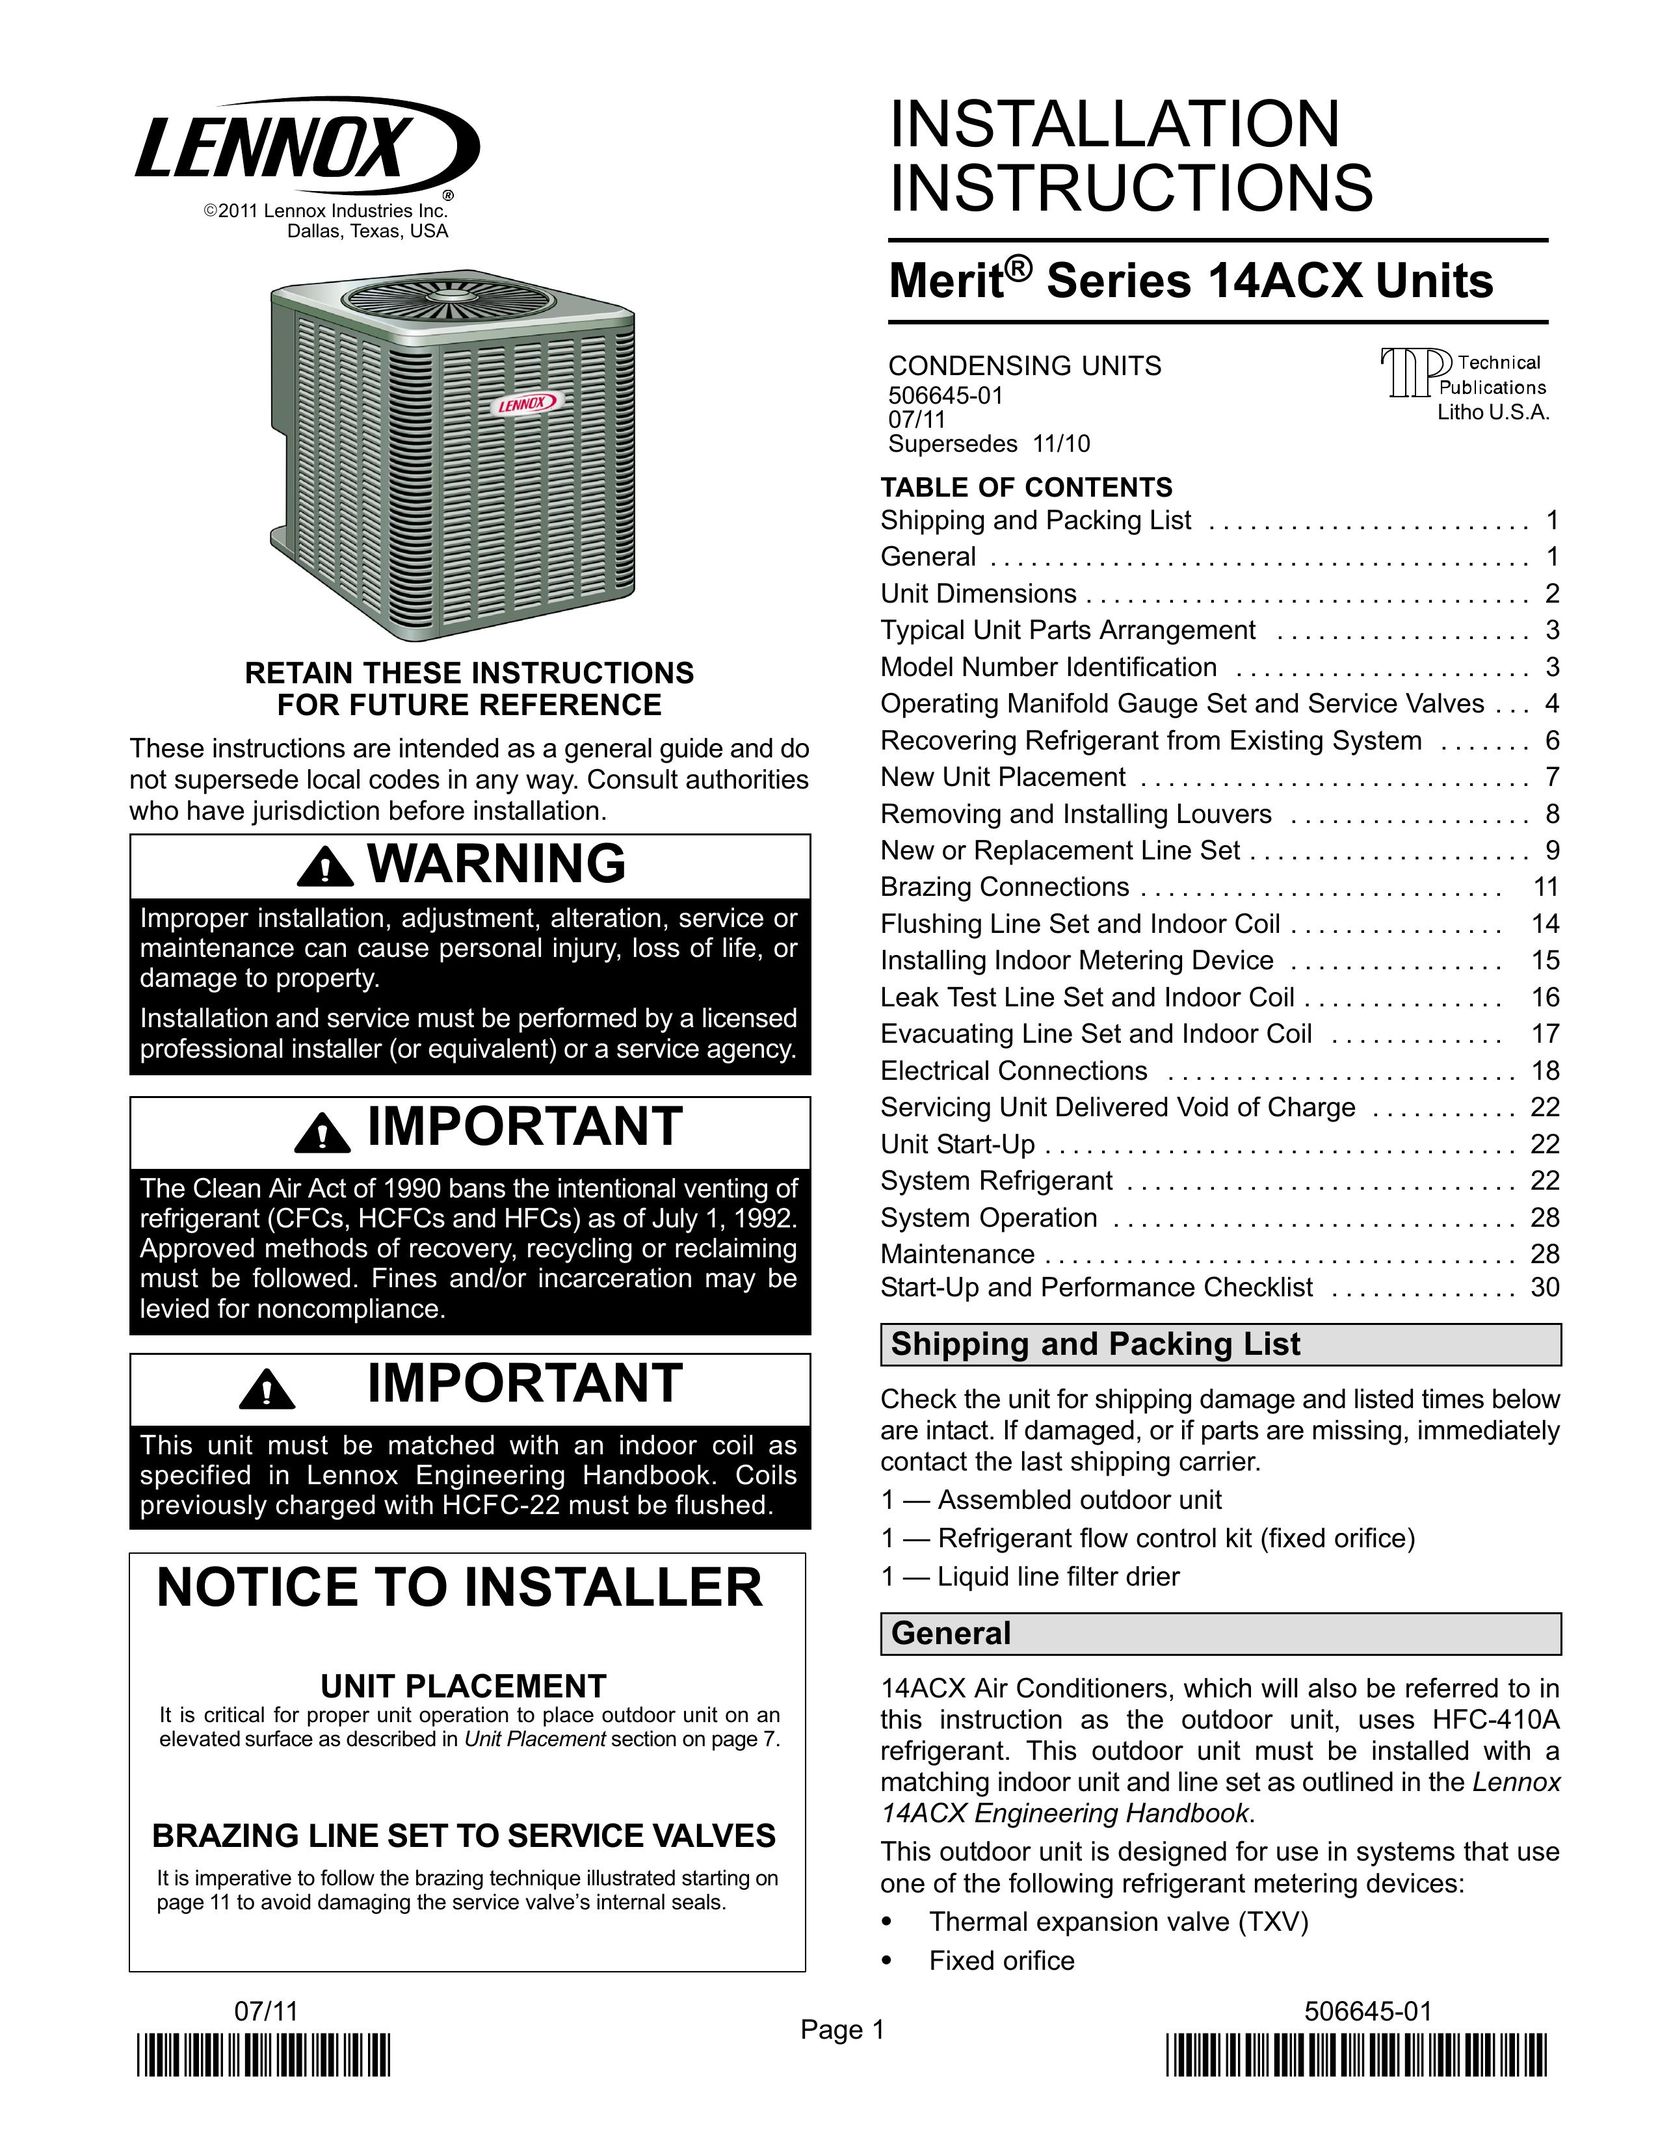 Lennox International Inc. Merit Series 14ACX Units Air Conditioner User Manual